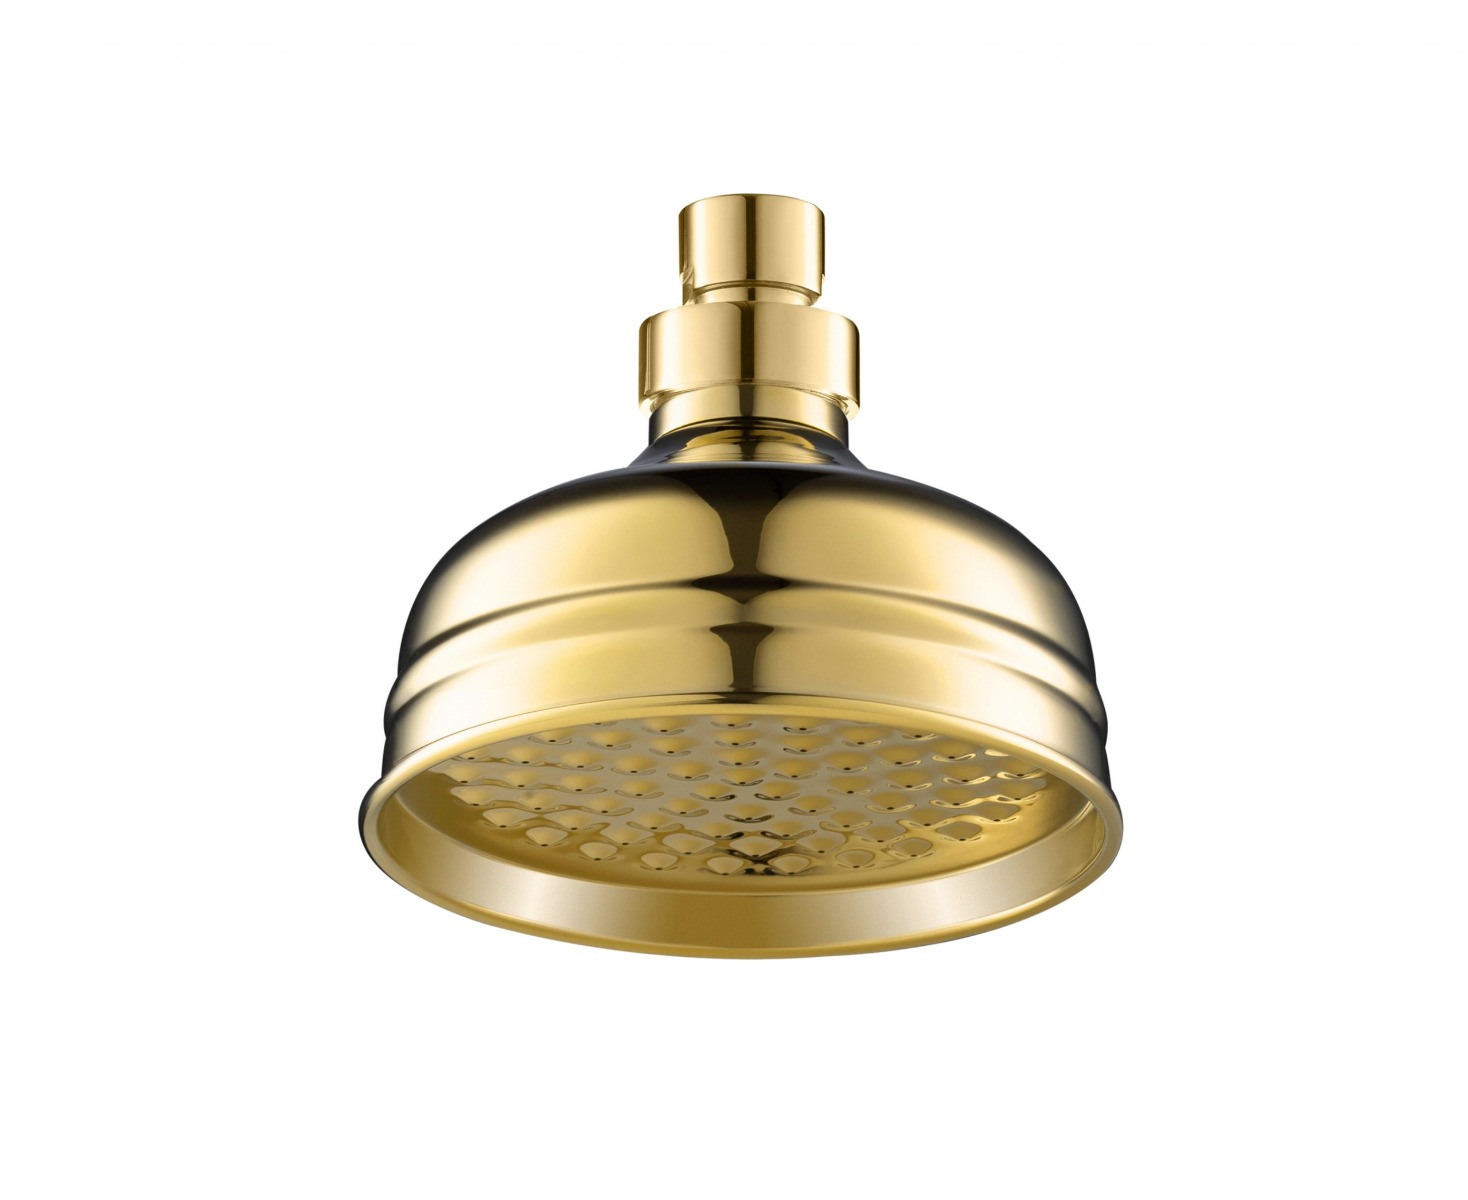 Brass Victorian shower head, 200mm, HP 1 G15889